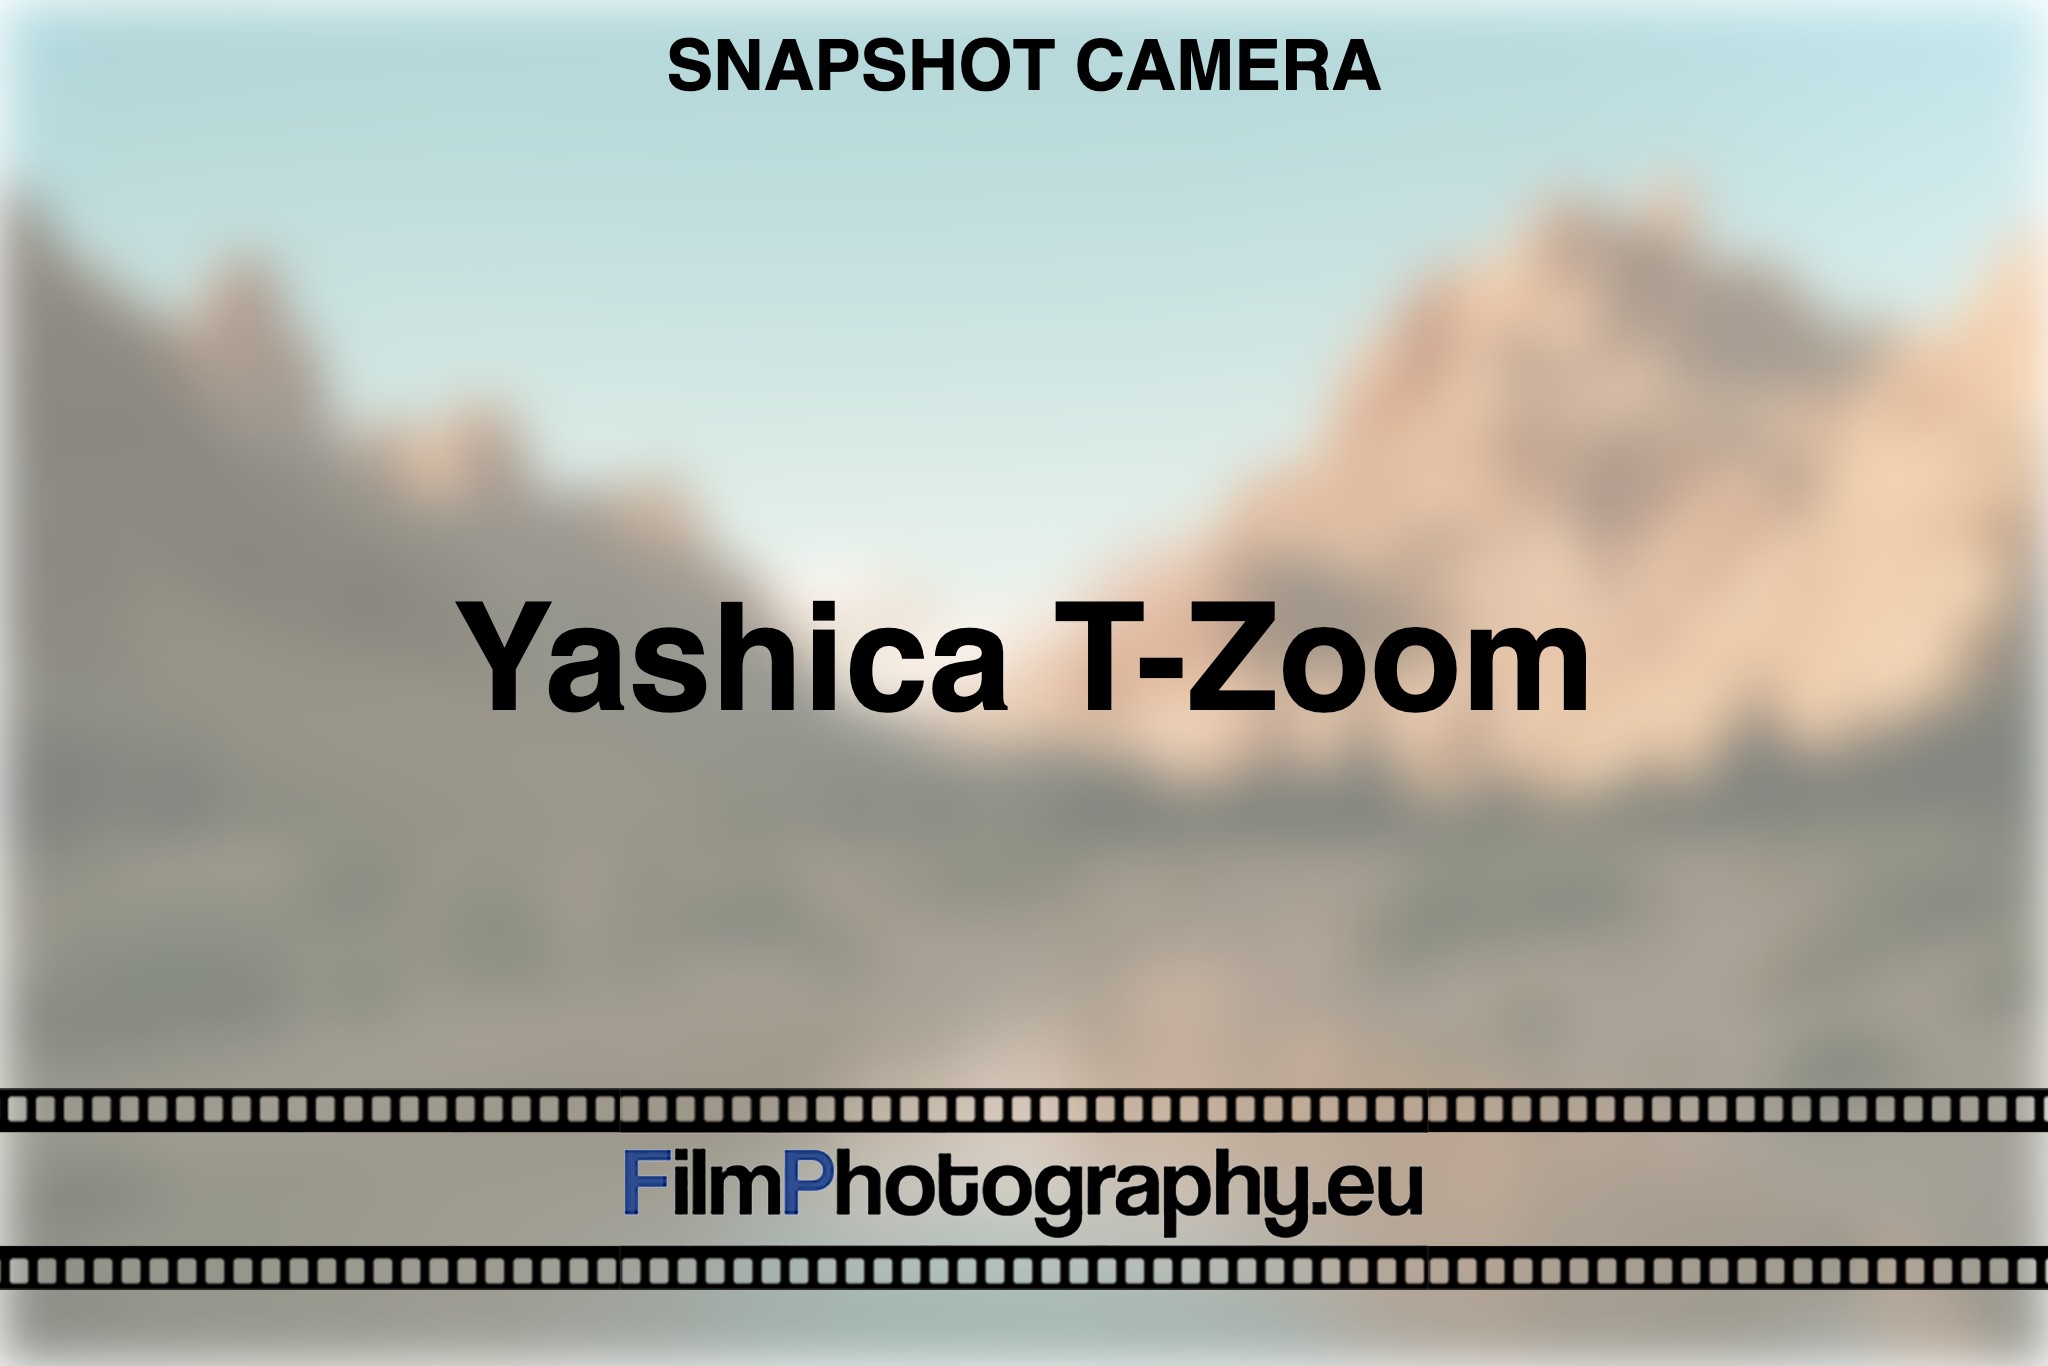 yashica-t-zoom-snapshot-camera-bnv